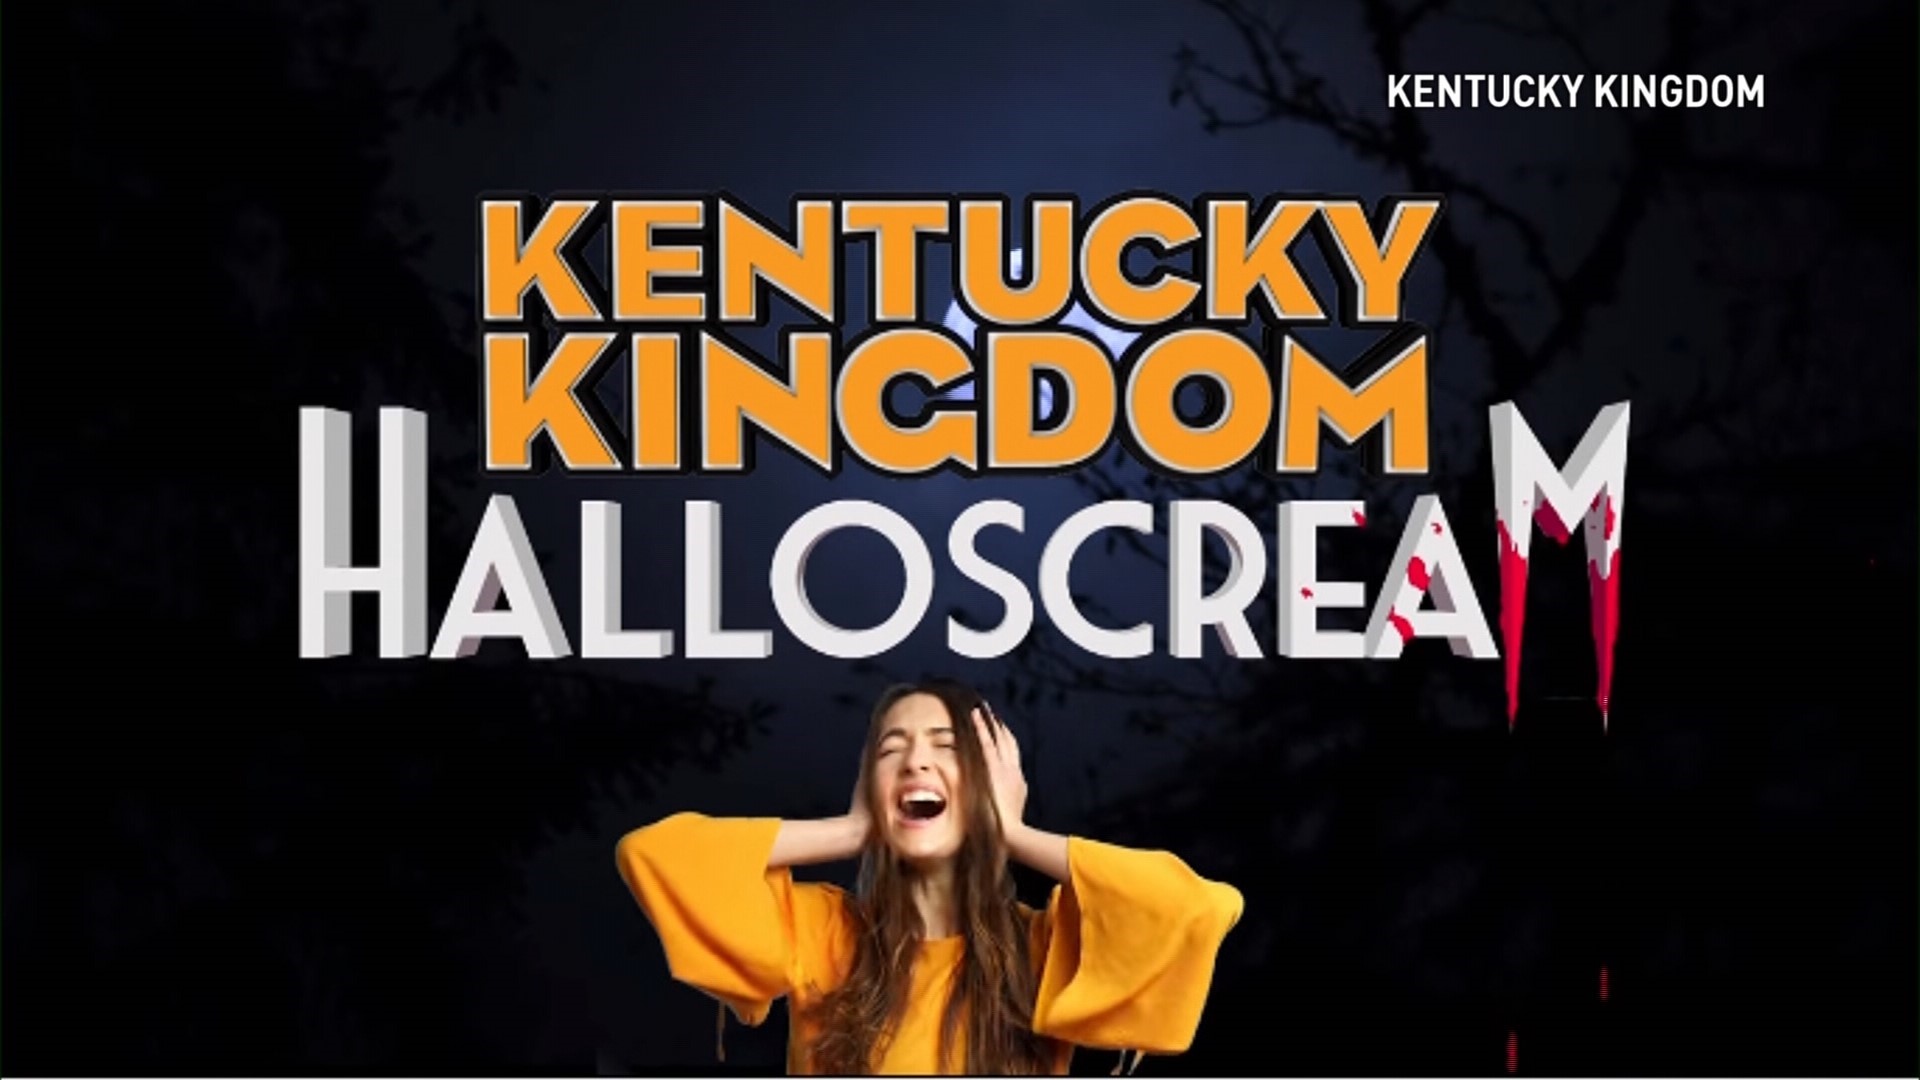 Thousands visit Kentucky Kingdom for Halloscream's debut weekend